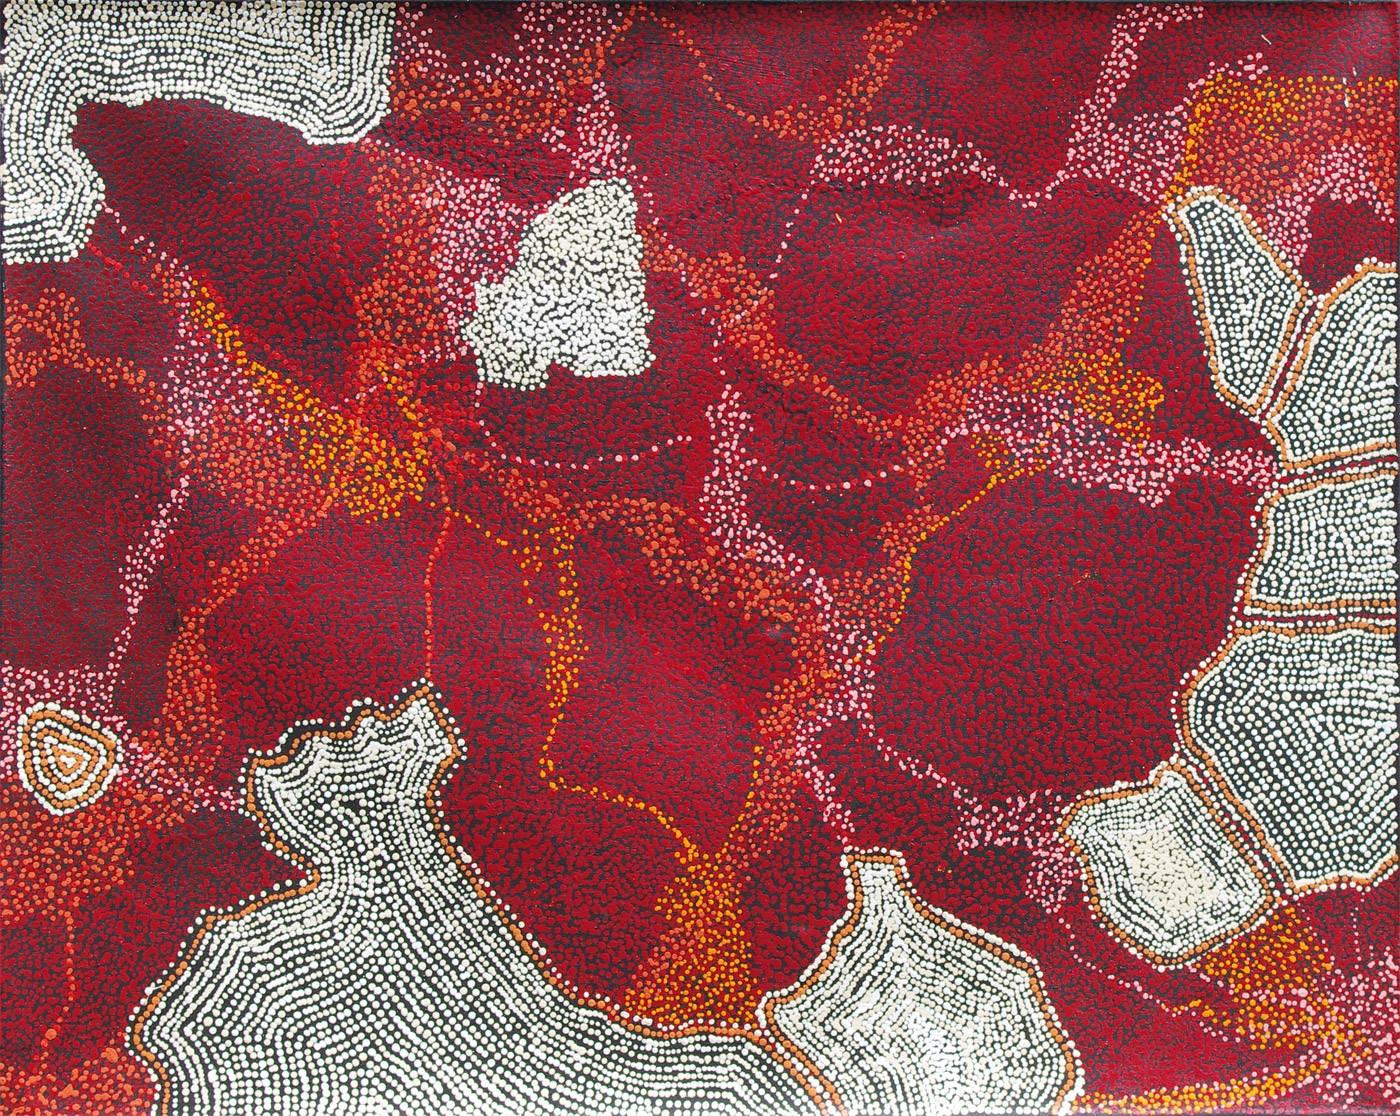 Munu Kulyuru Landscape Painting - Muna Kulyuru, My Country, red white contemporary Aboriginal landscape painting